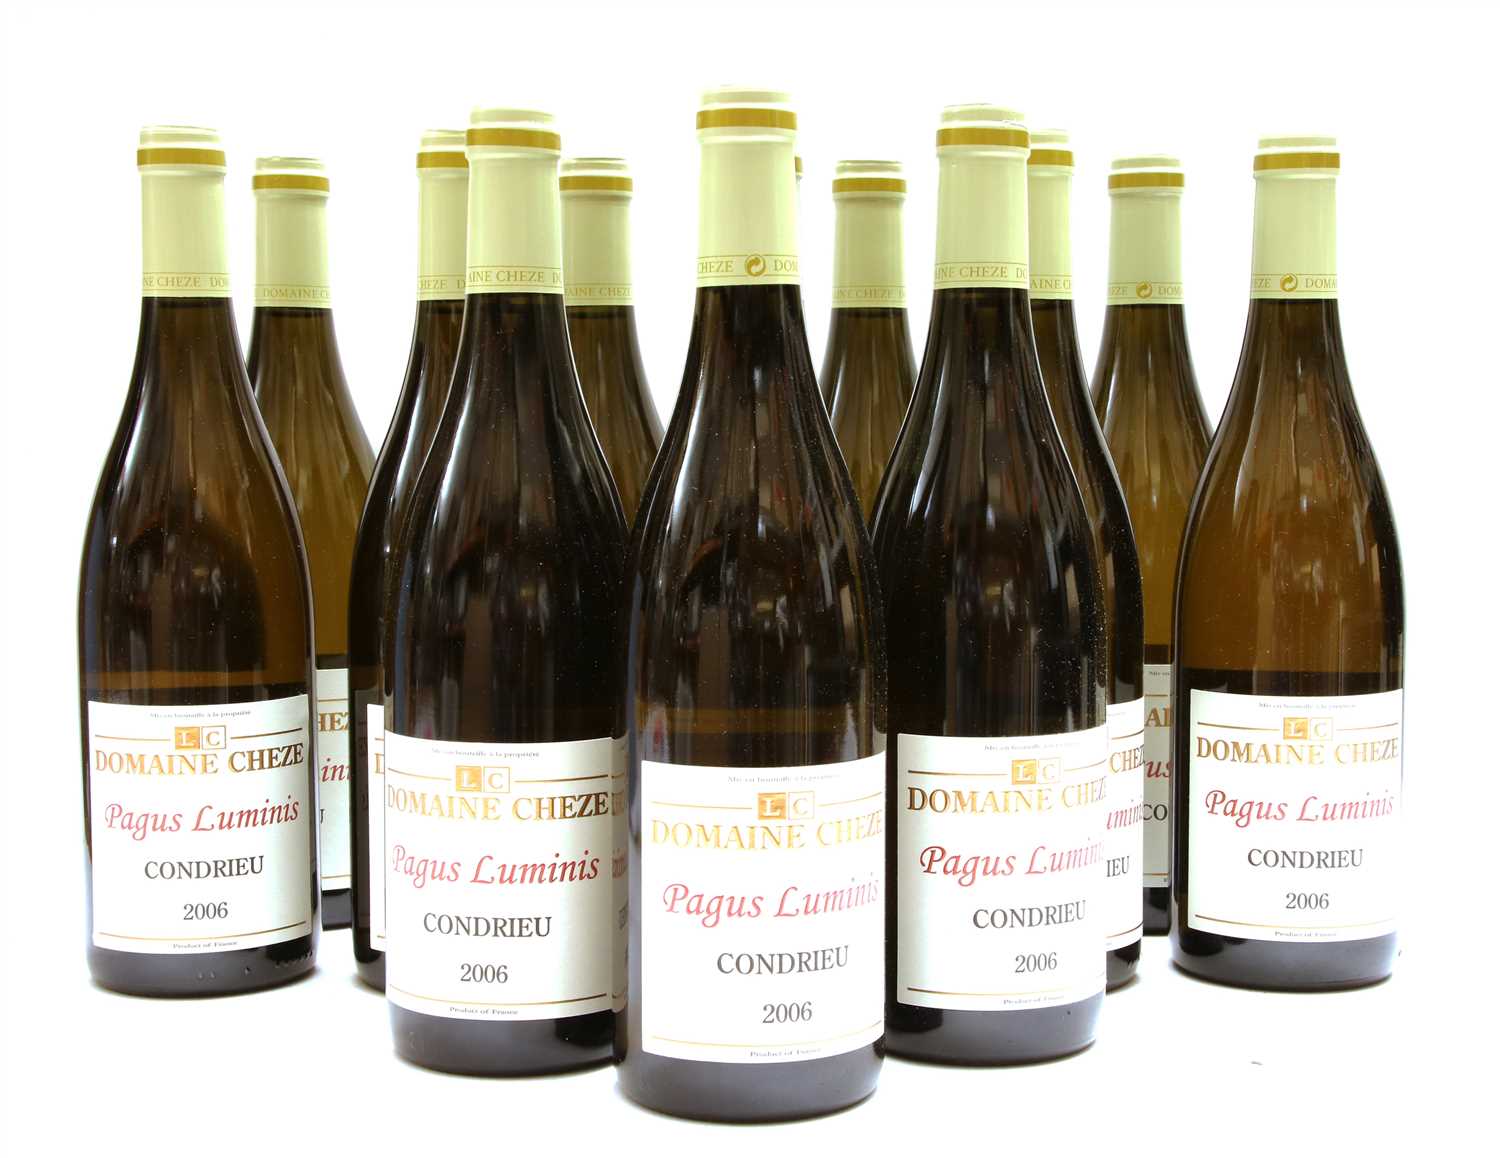 Lot 2 - Domaine Cheze, Pagus Luminis, Condrieu, 2006, twelve bottles (two boxes of six)